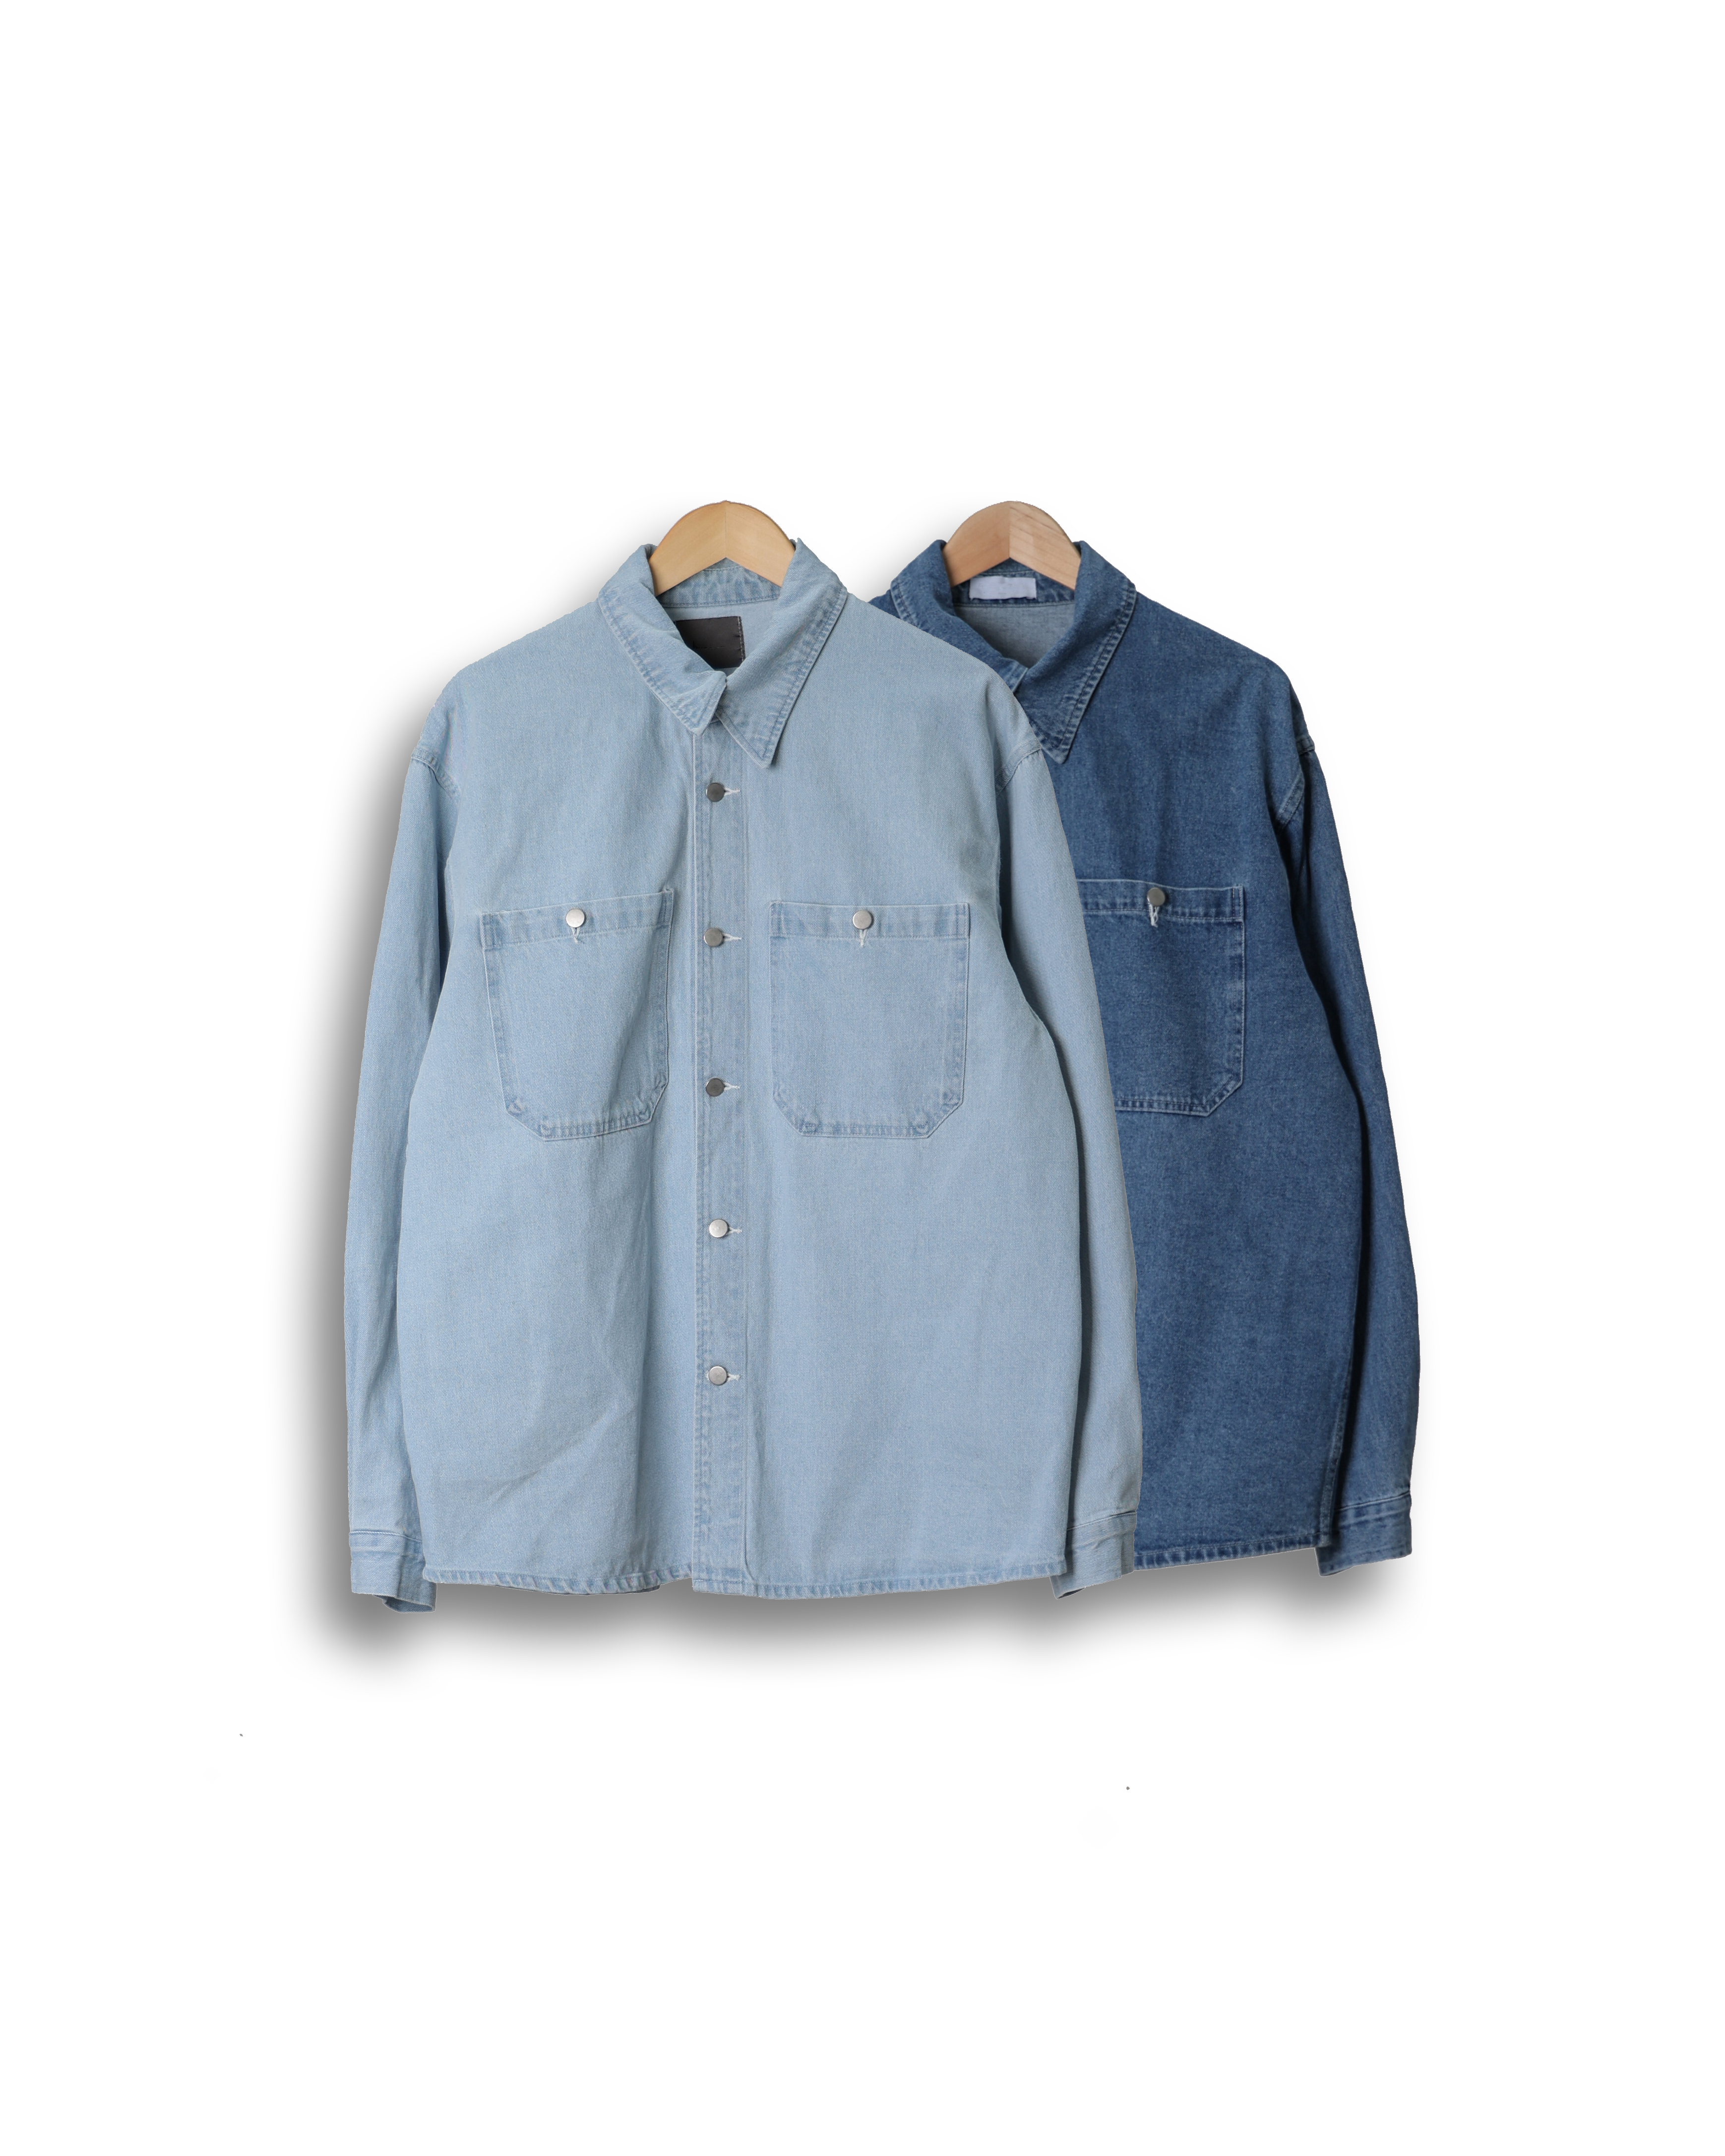 ANSWR Double Pocket Denim Shirts Jacket (Middle Denim/Light Denim)